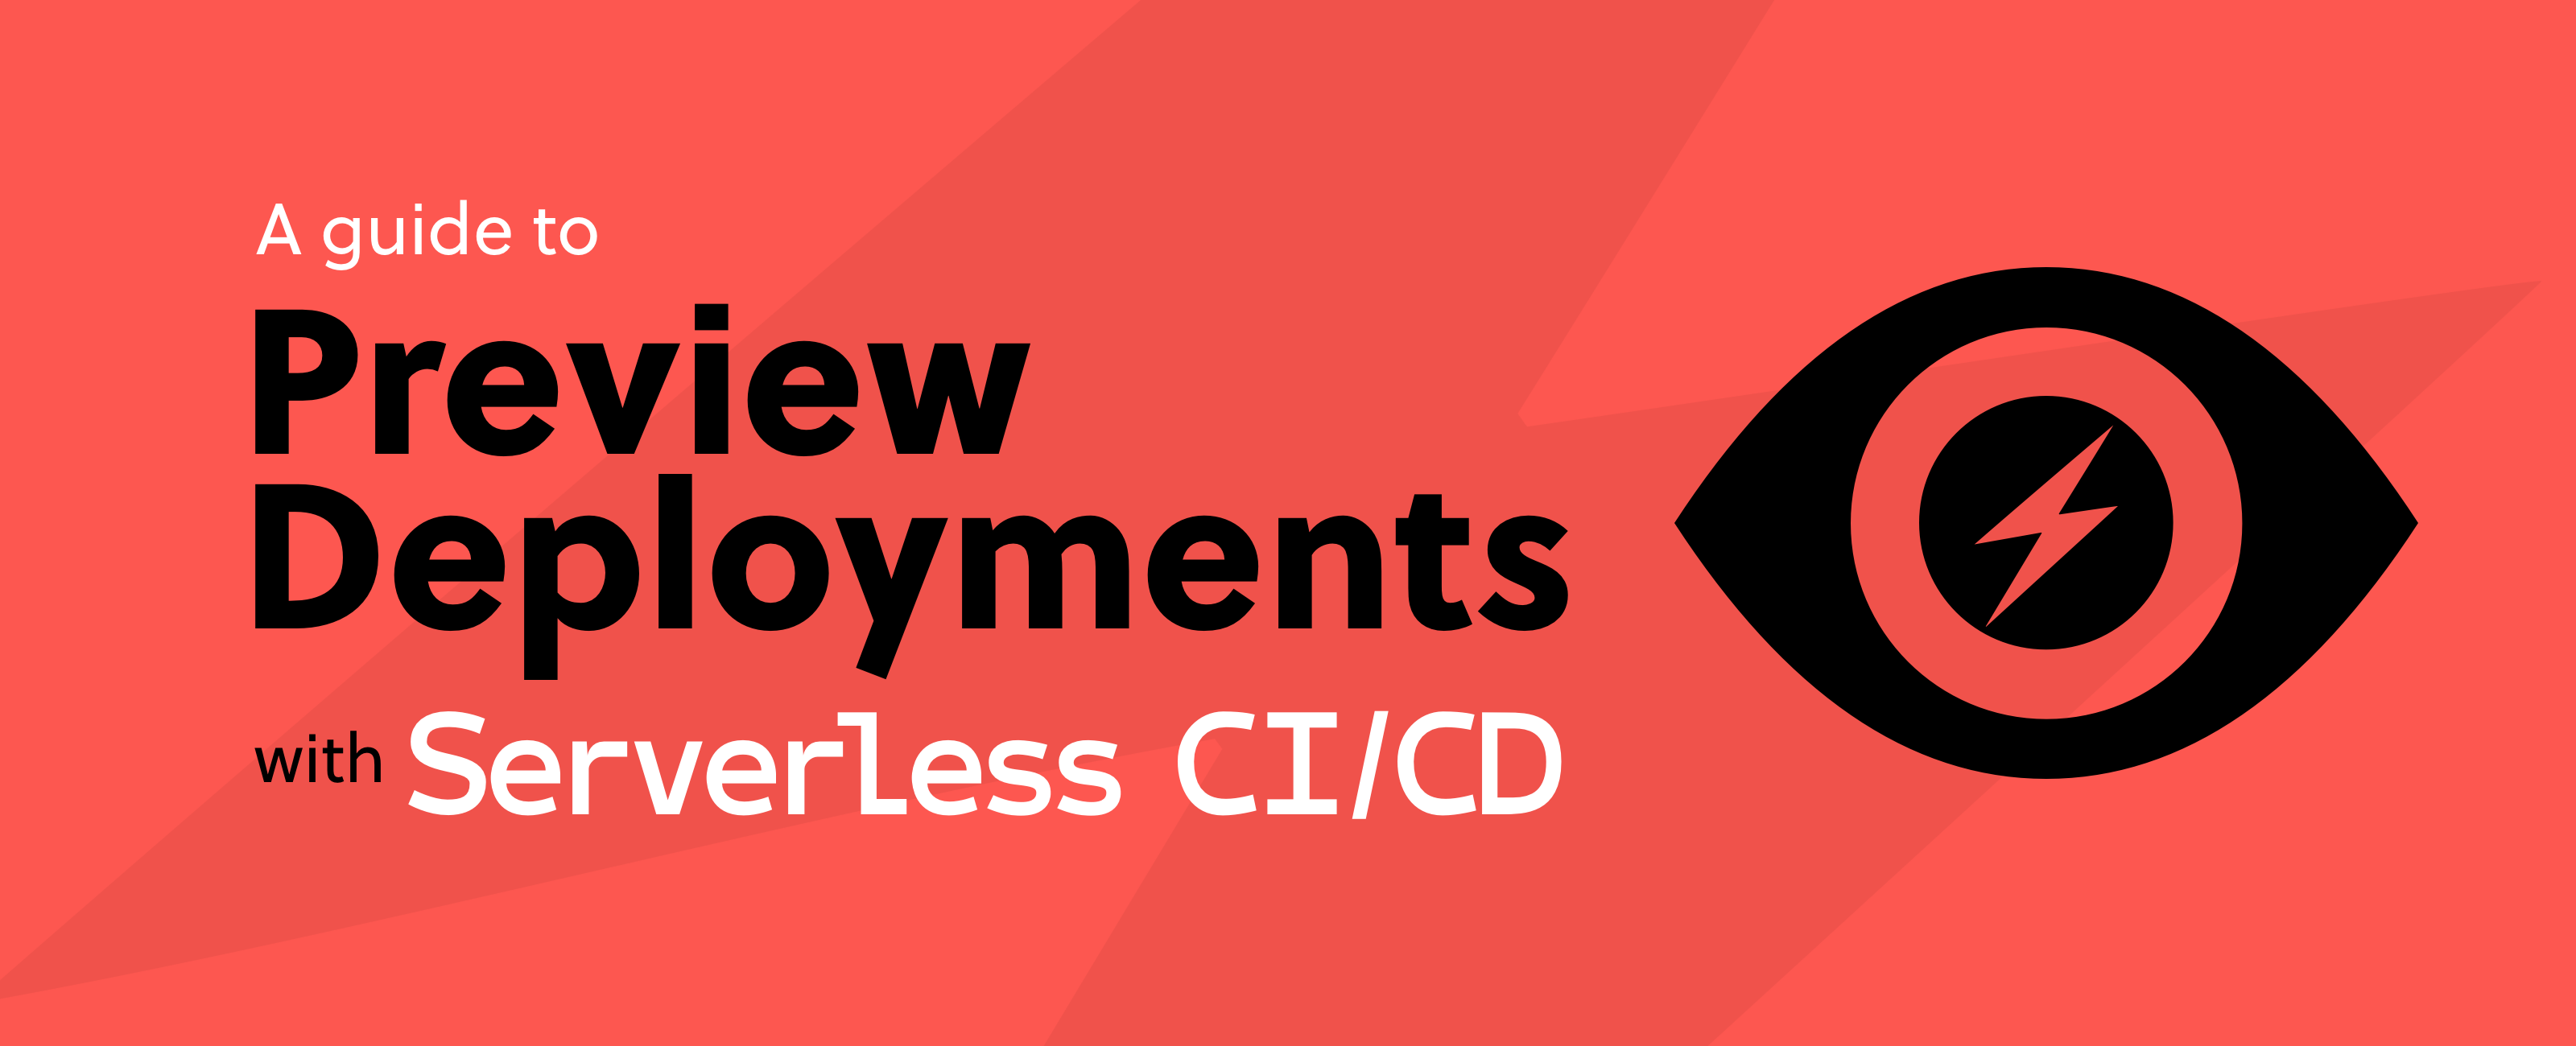 Serverless CI/CD Preview Deployments